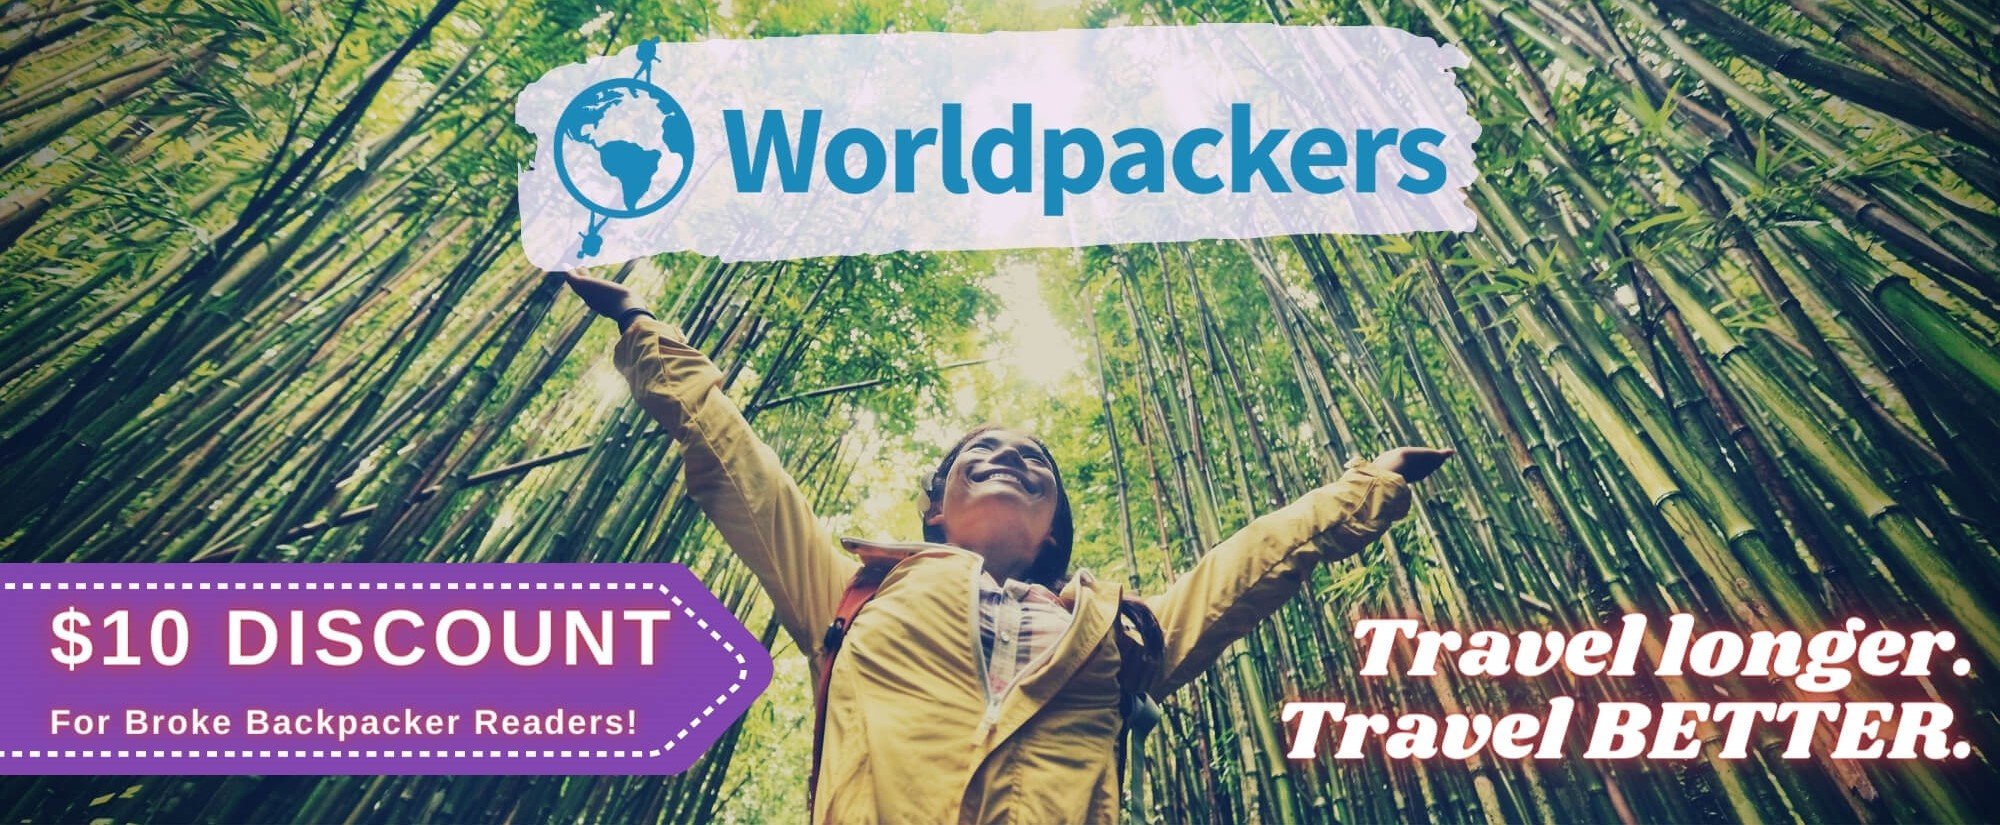 worldpackers plug banner image